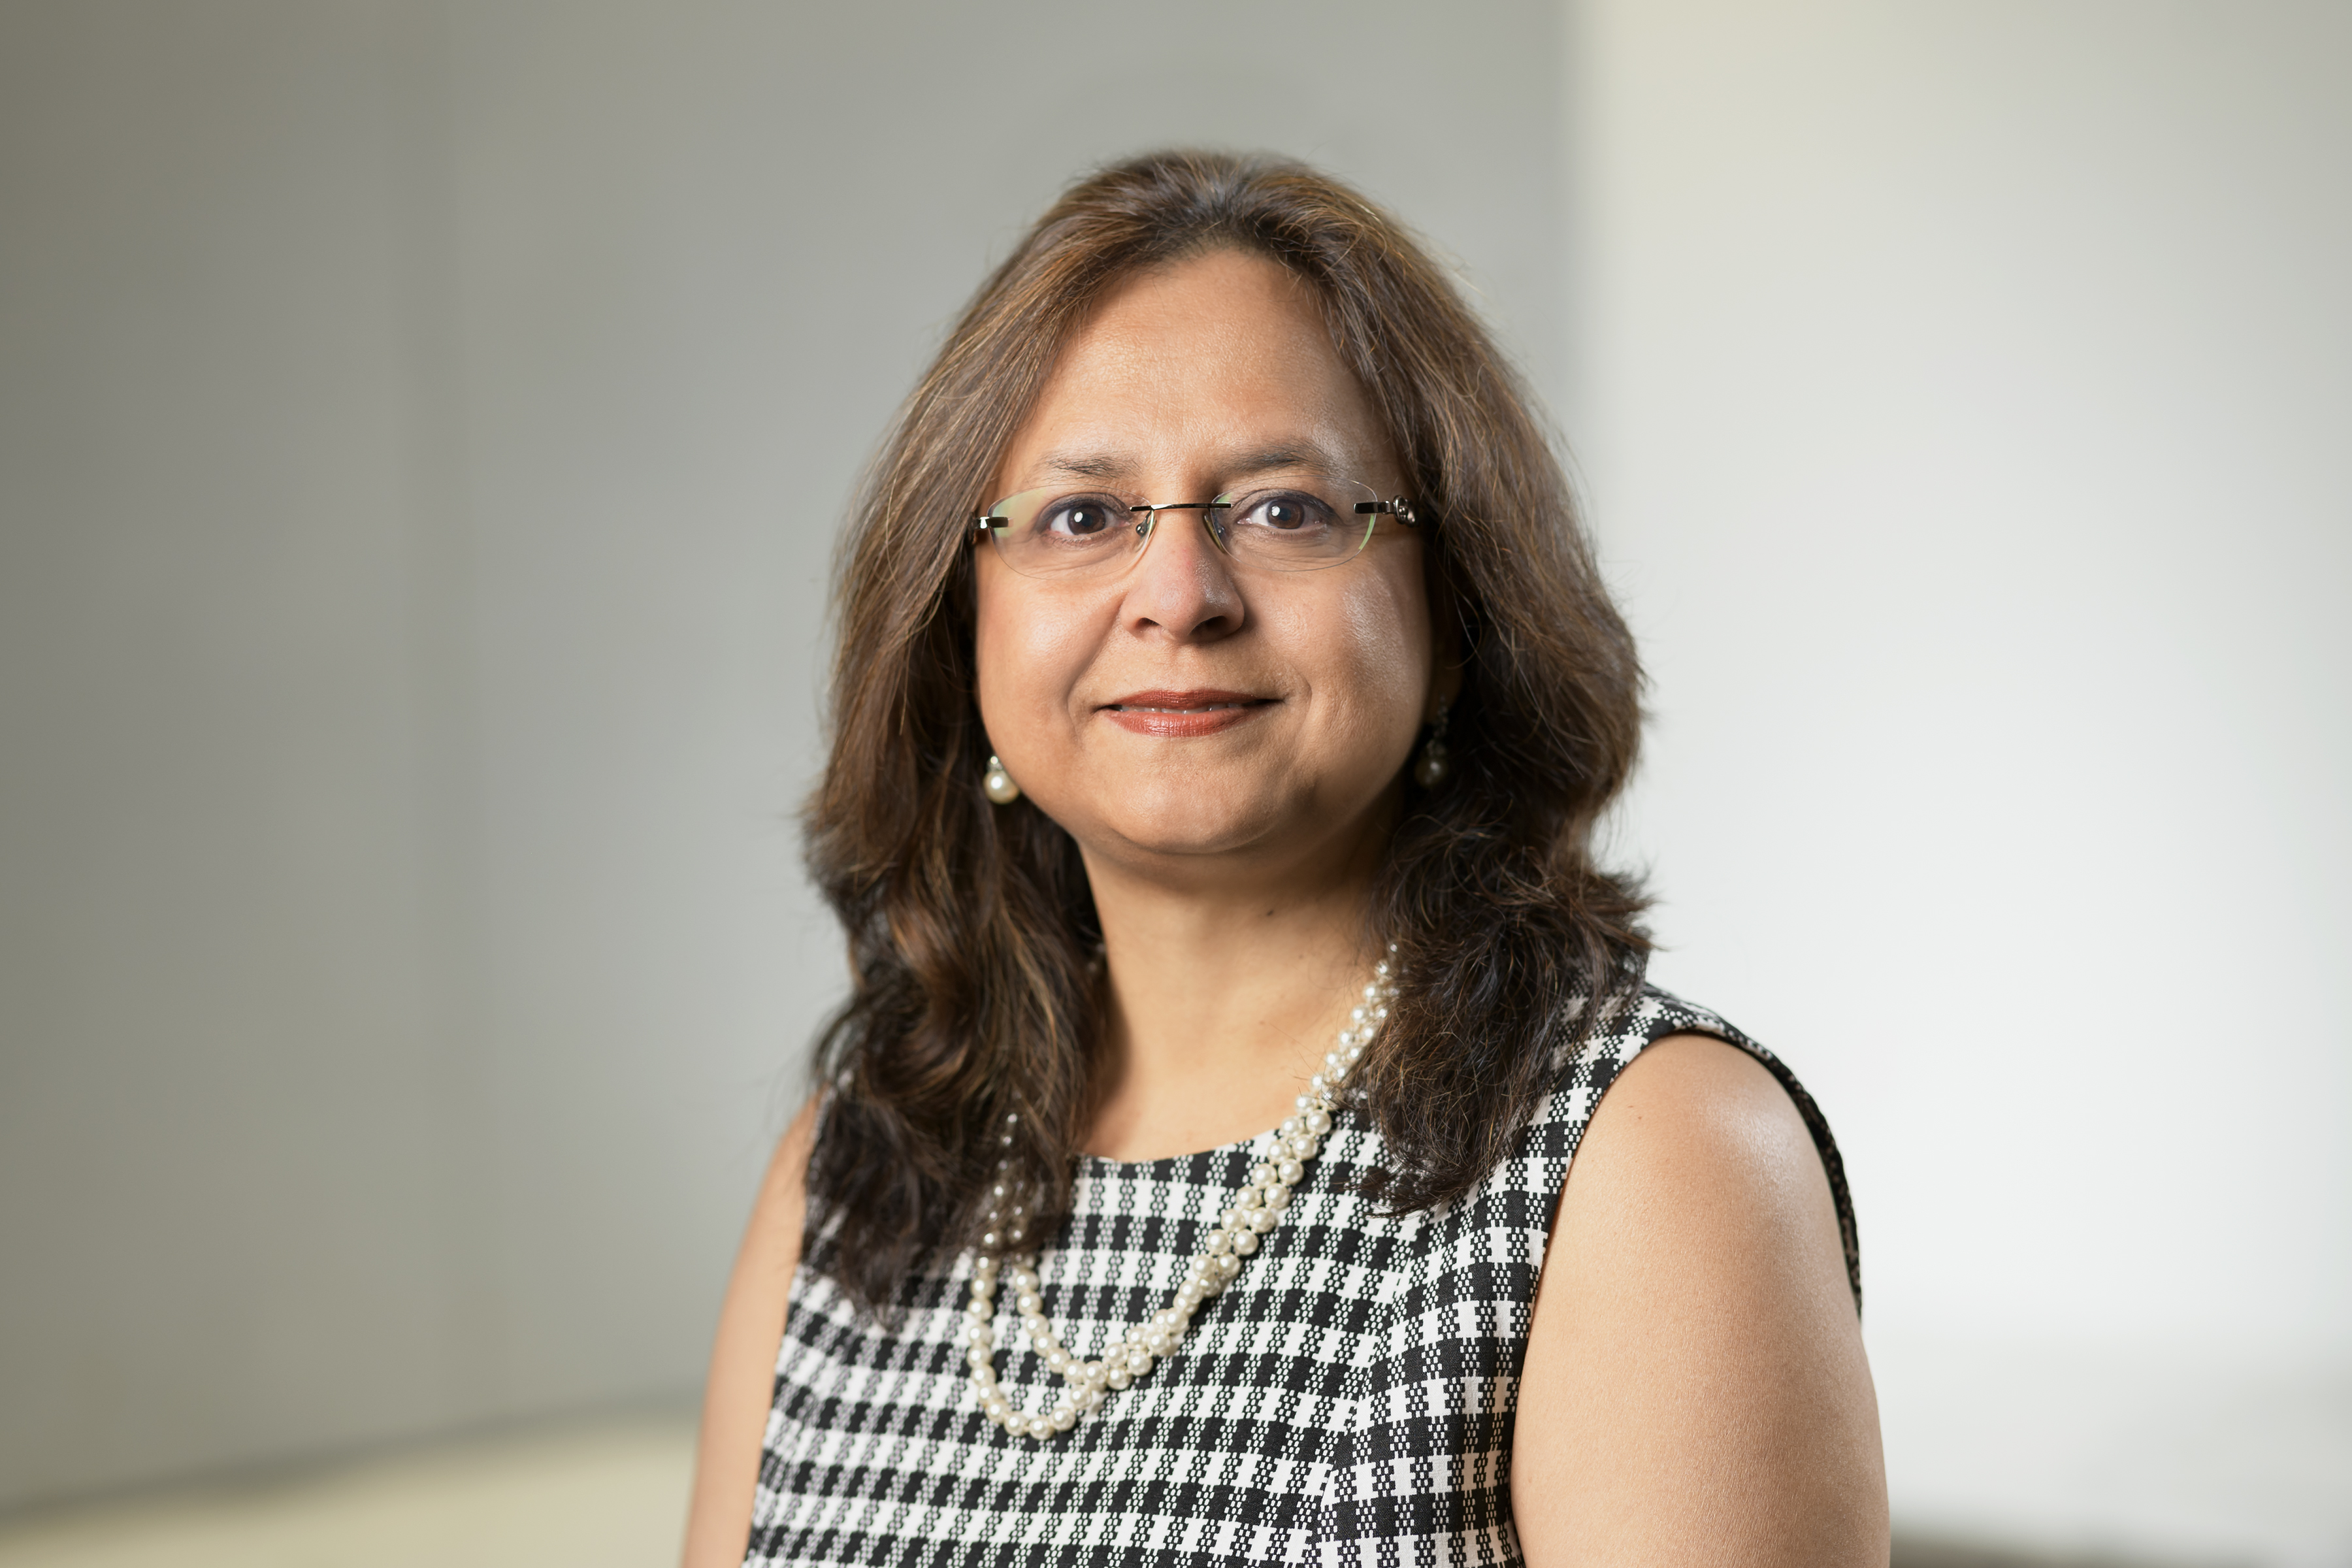 Amita Shukla-Dave, PhD